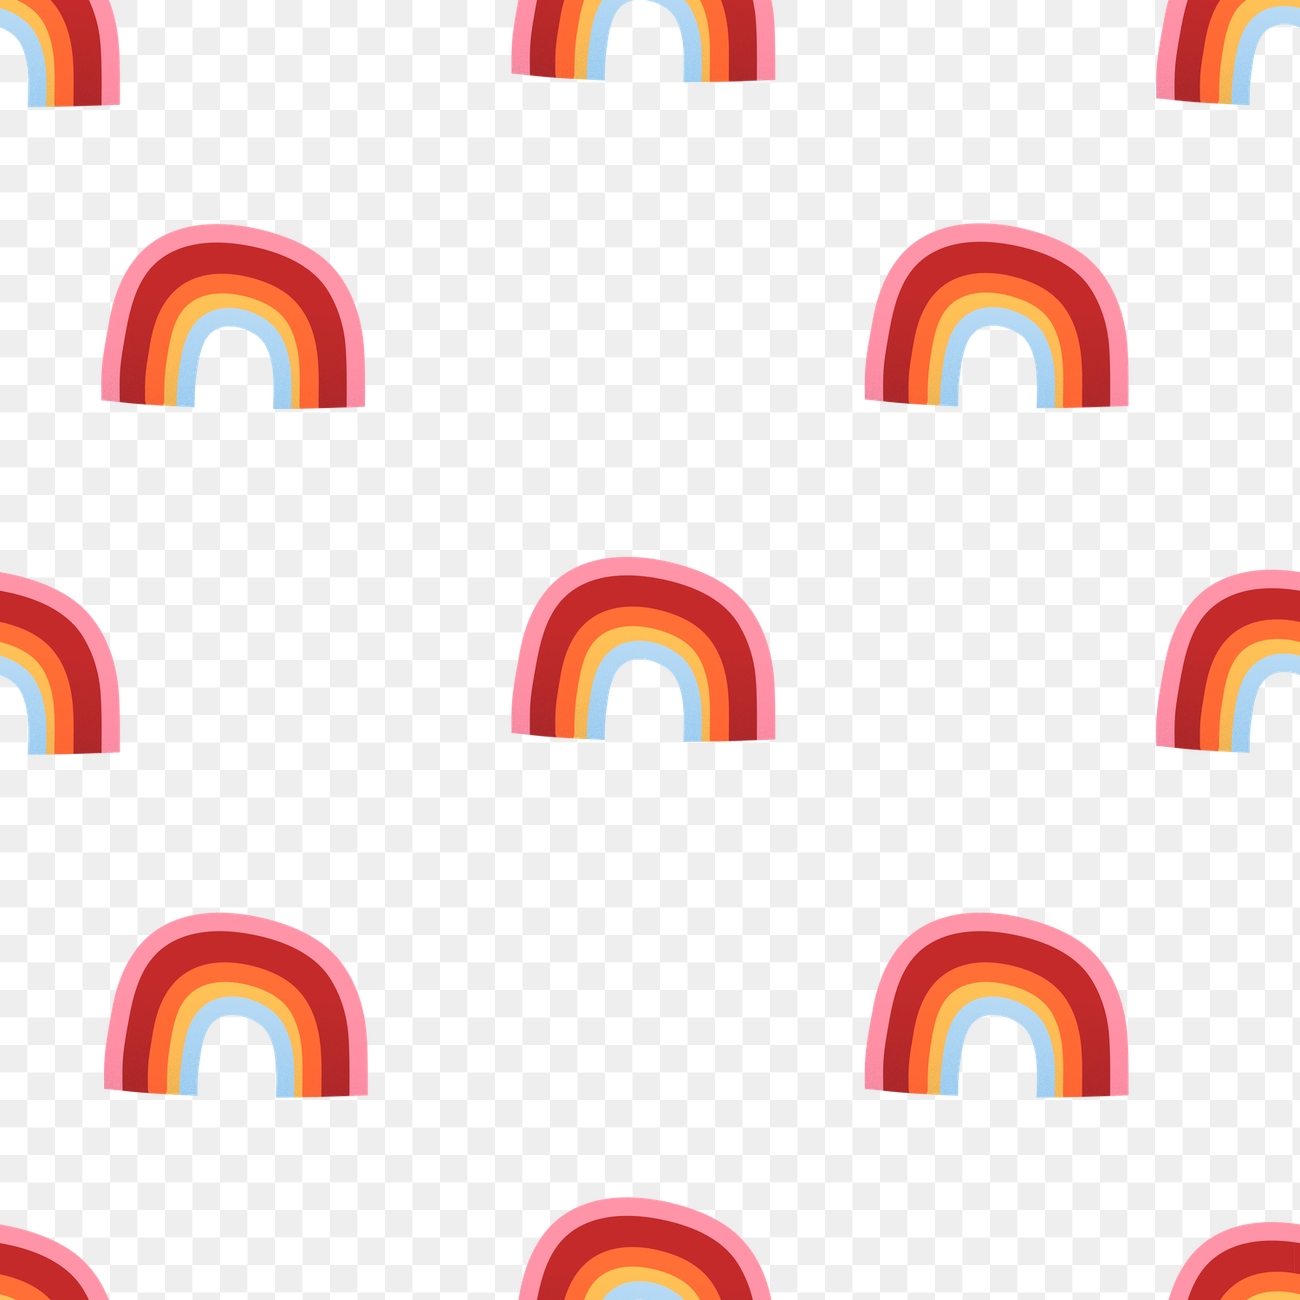 Rainbow pattern png transparent background, | Premium PNG - rawpixel